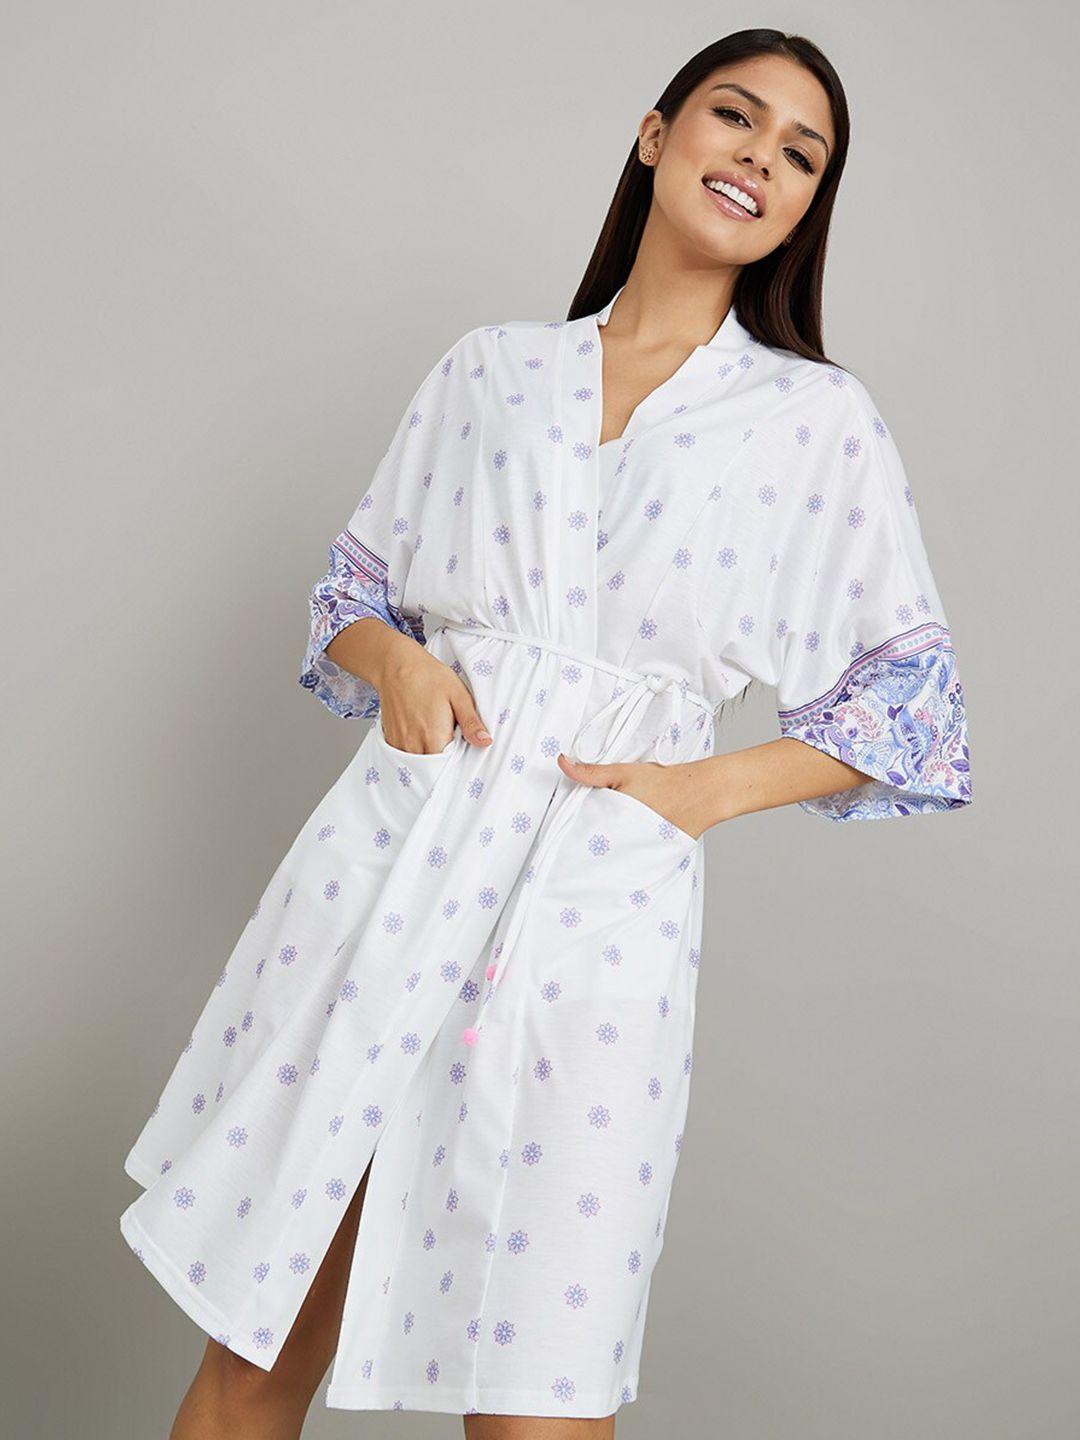 styli-floral-printed-wrap-nightdress